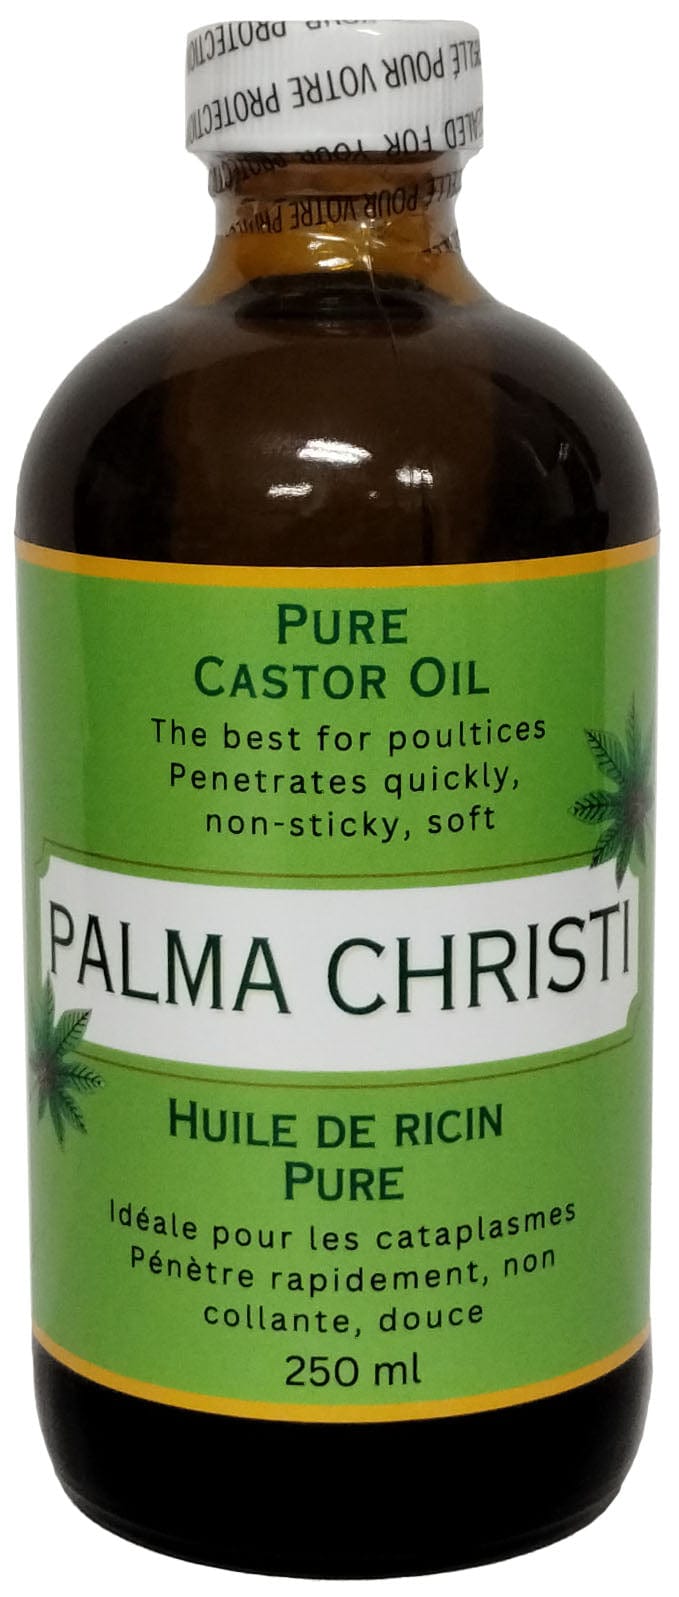 PALMA CHRISTI NATURELLE Soins & Beauté Palma christi (huile de ricin) 250ml